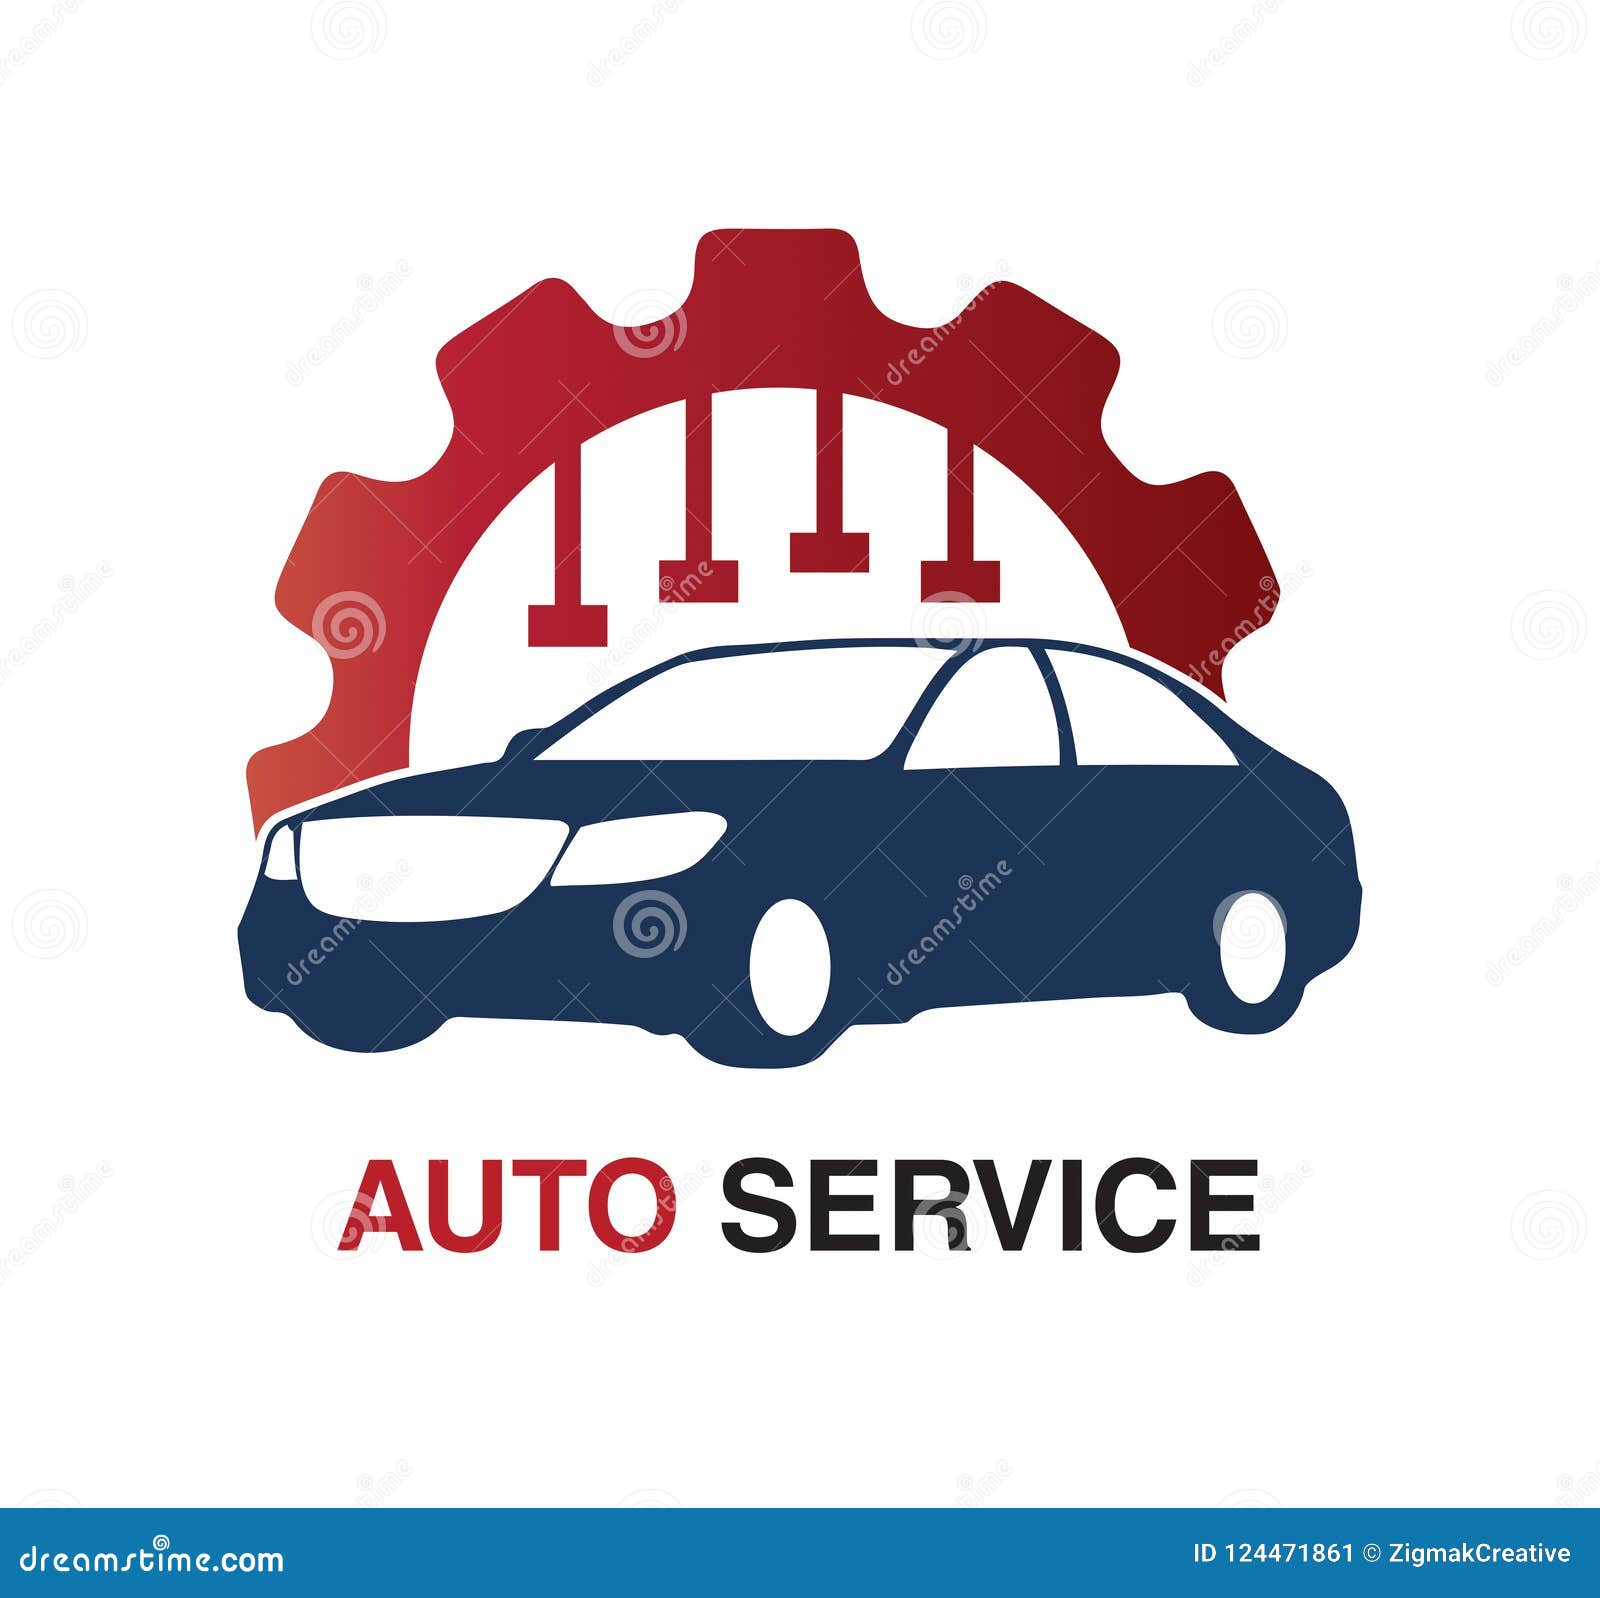 Auto Service Logo Design | Download Free and Premium PSD Mockup ...